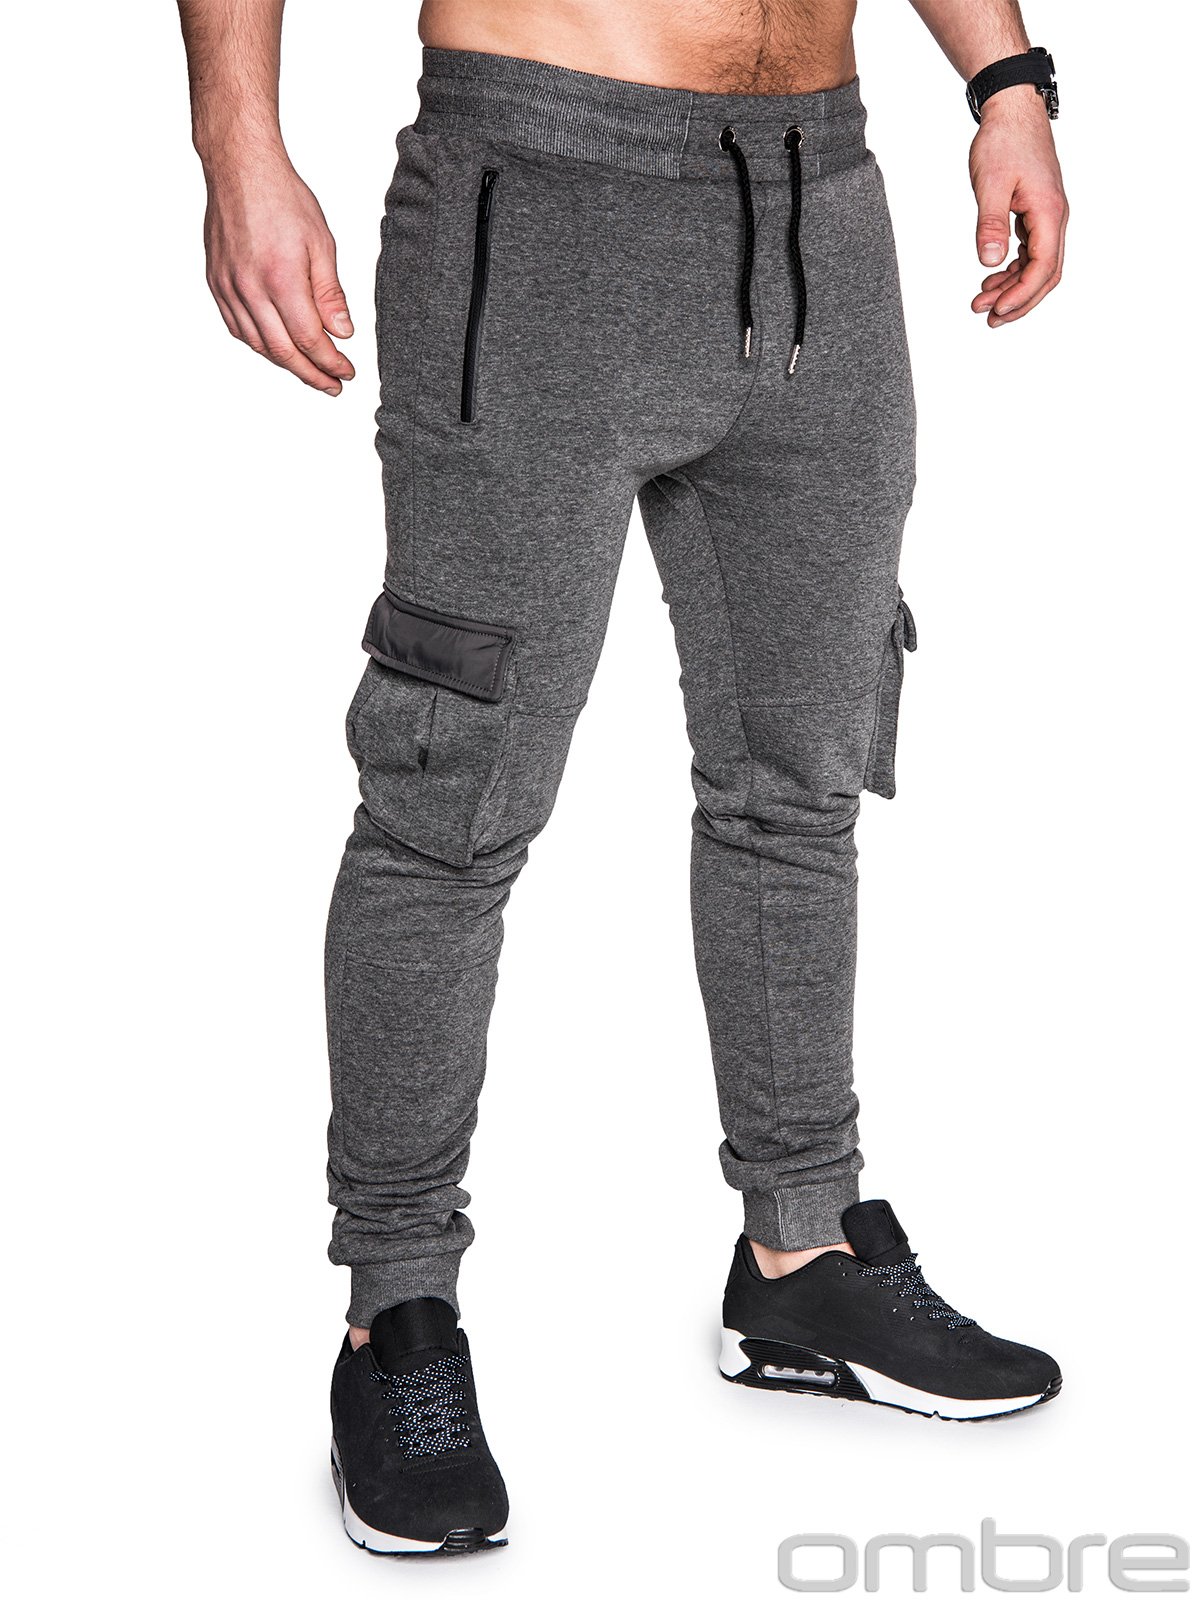 Men's sweatpants P429 - dark grey | MODONE wholesale - Clothing For Men